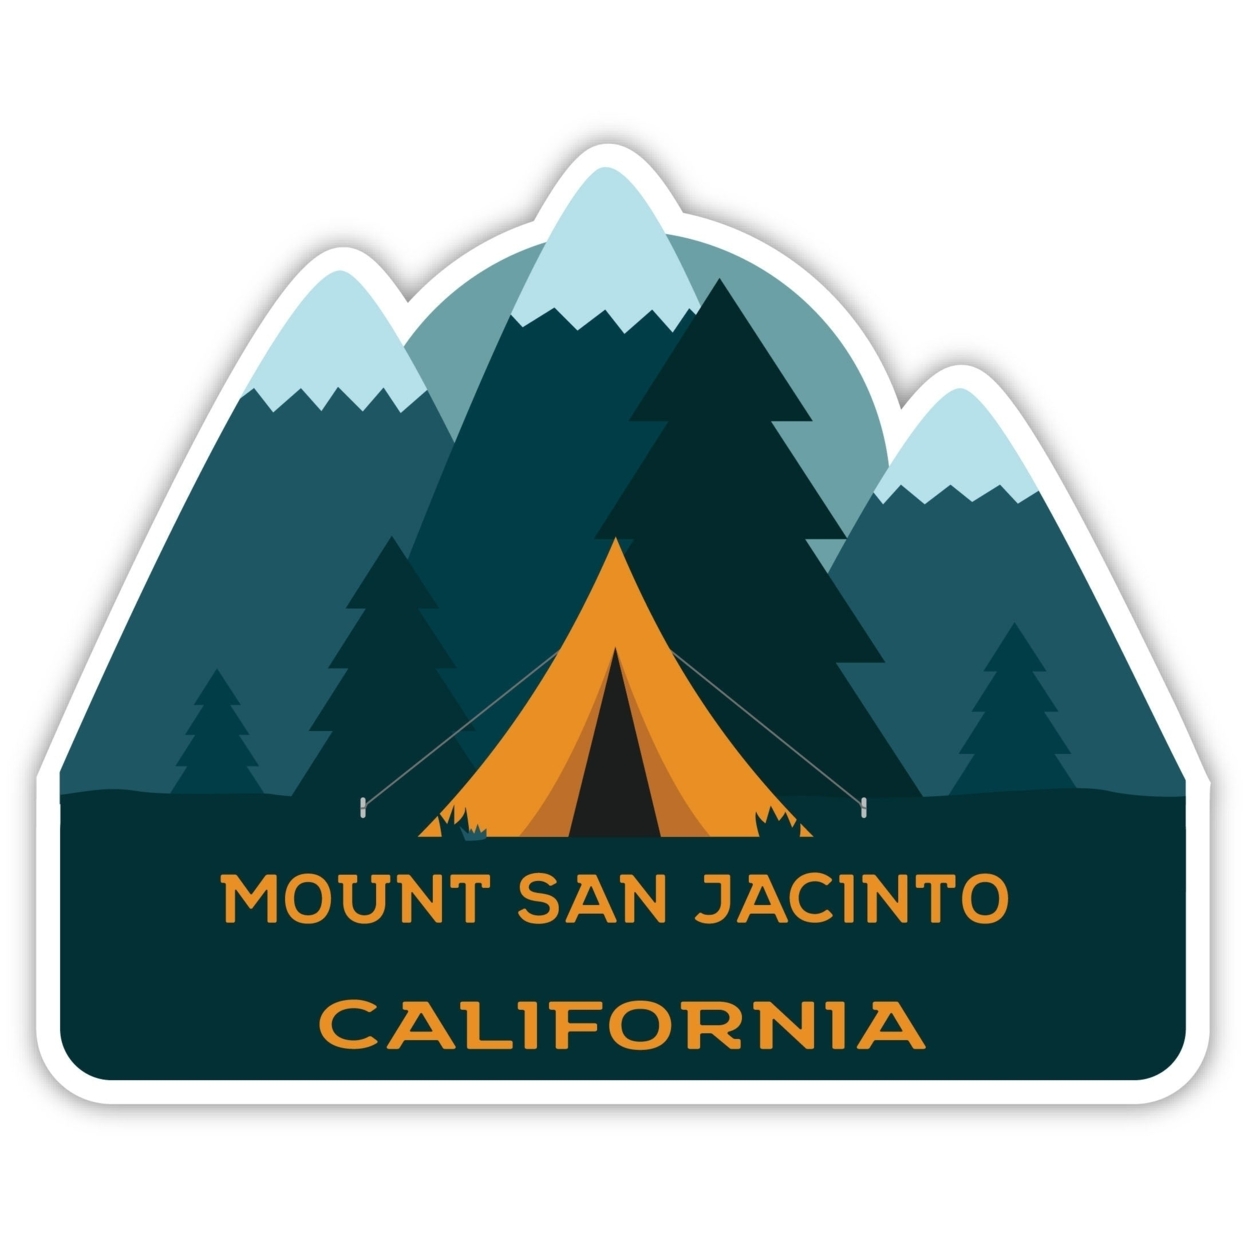 Mount San Jacinto California Souvenir Decorative Stickers (Choose Theme And Size) - Single Unit, 4-Inch, Tent